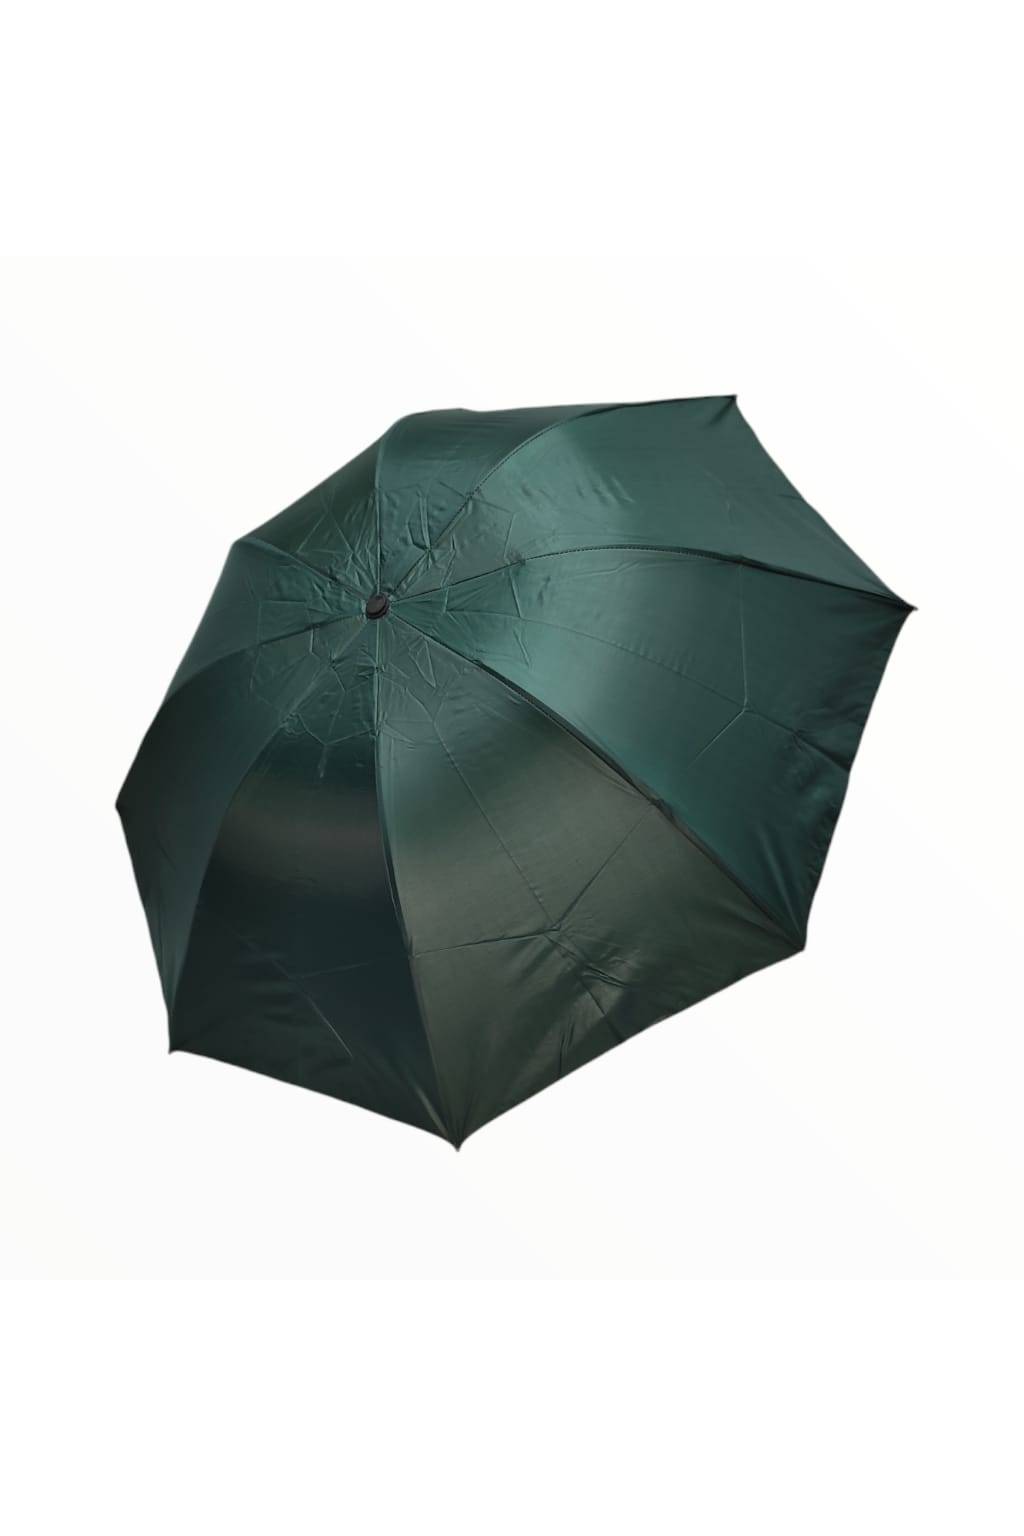 Vetruodolný dáždnik MINI zelený (2)